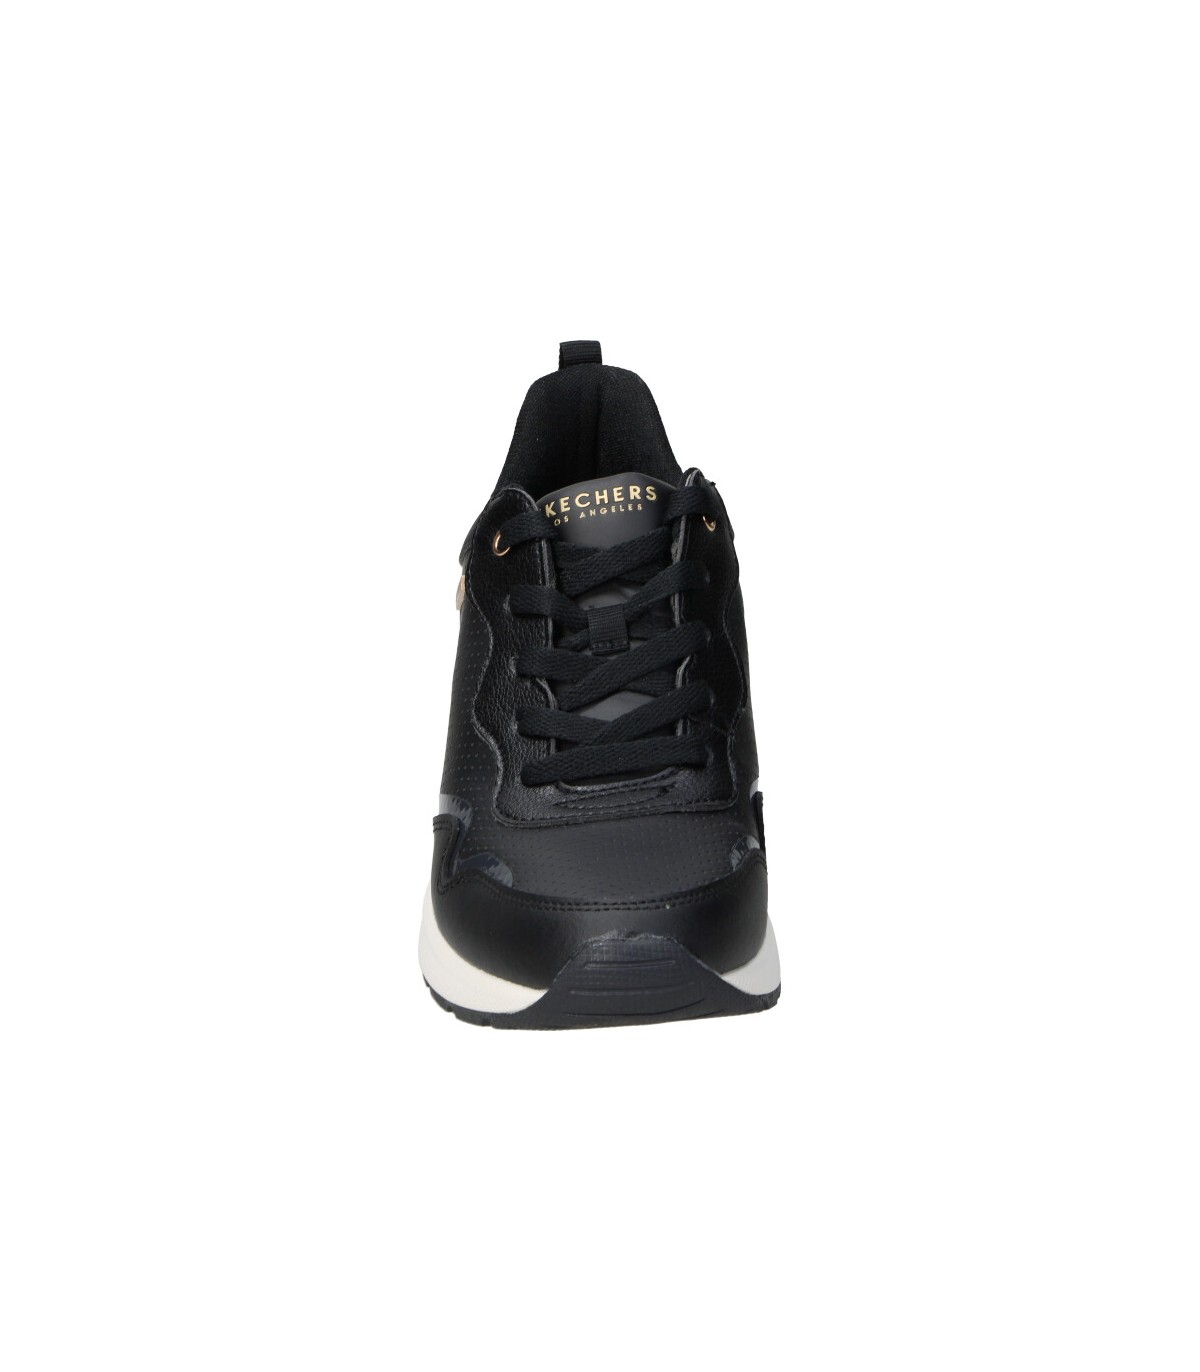 Zapatos SKECHERS 155399-blk negro para mujer